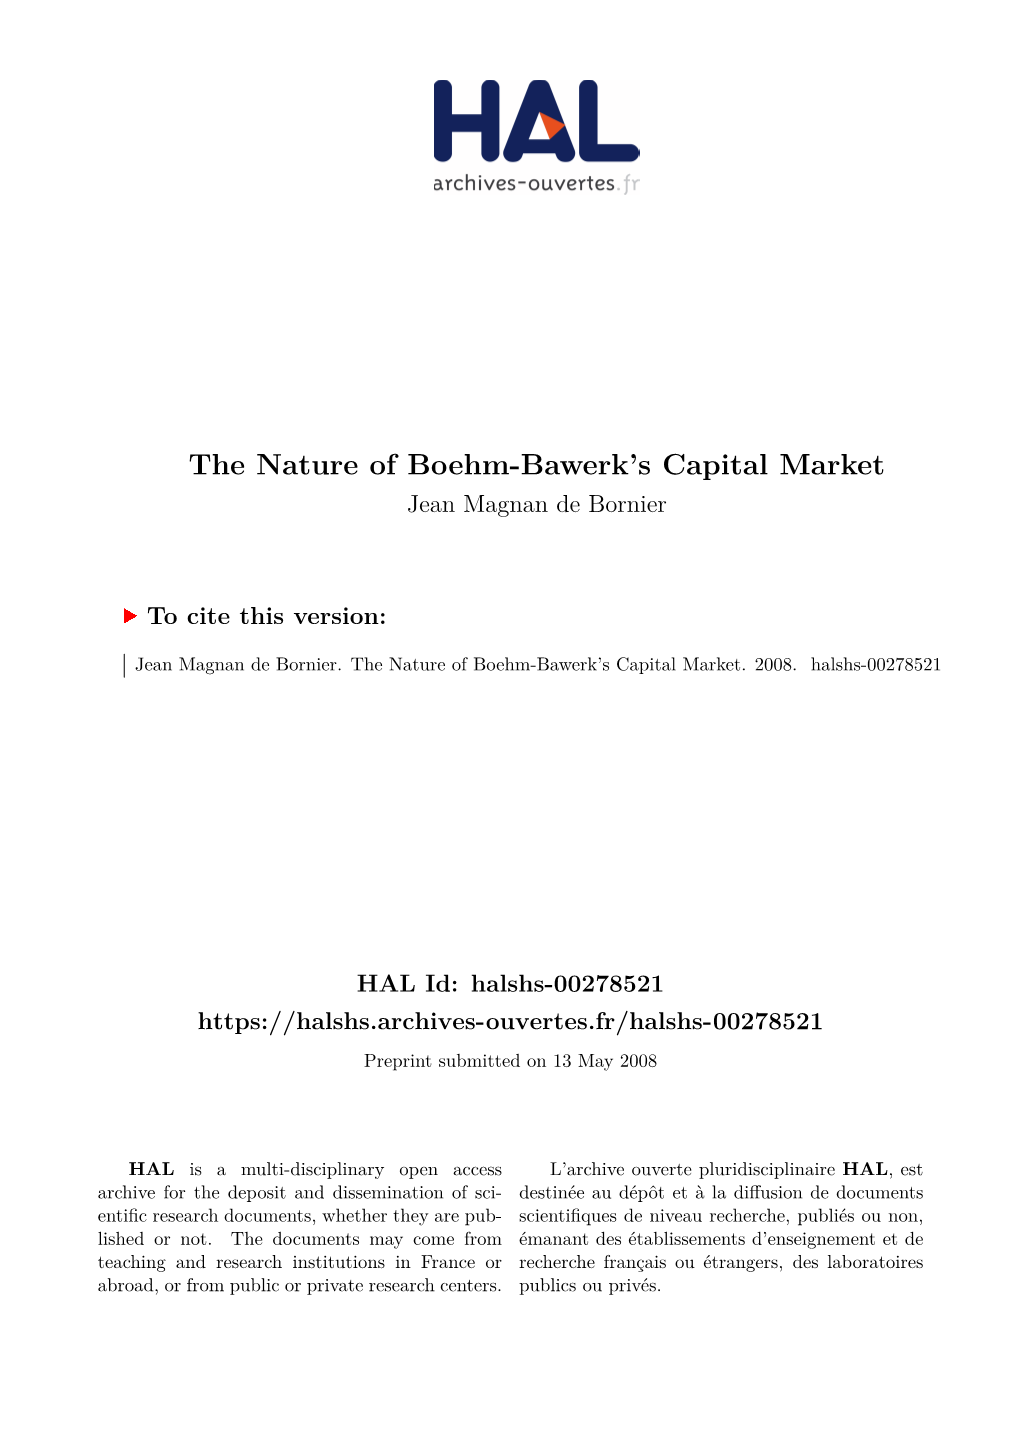 The Nature of Boehm-Bawerk's Capital Market